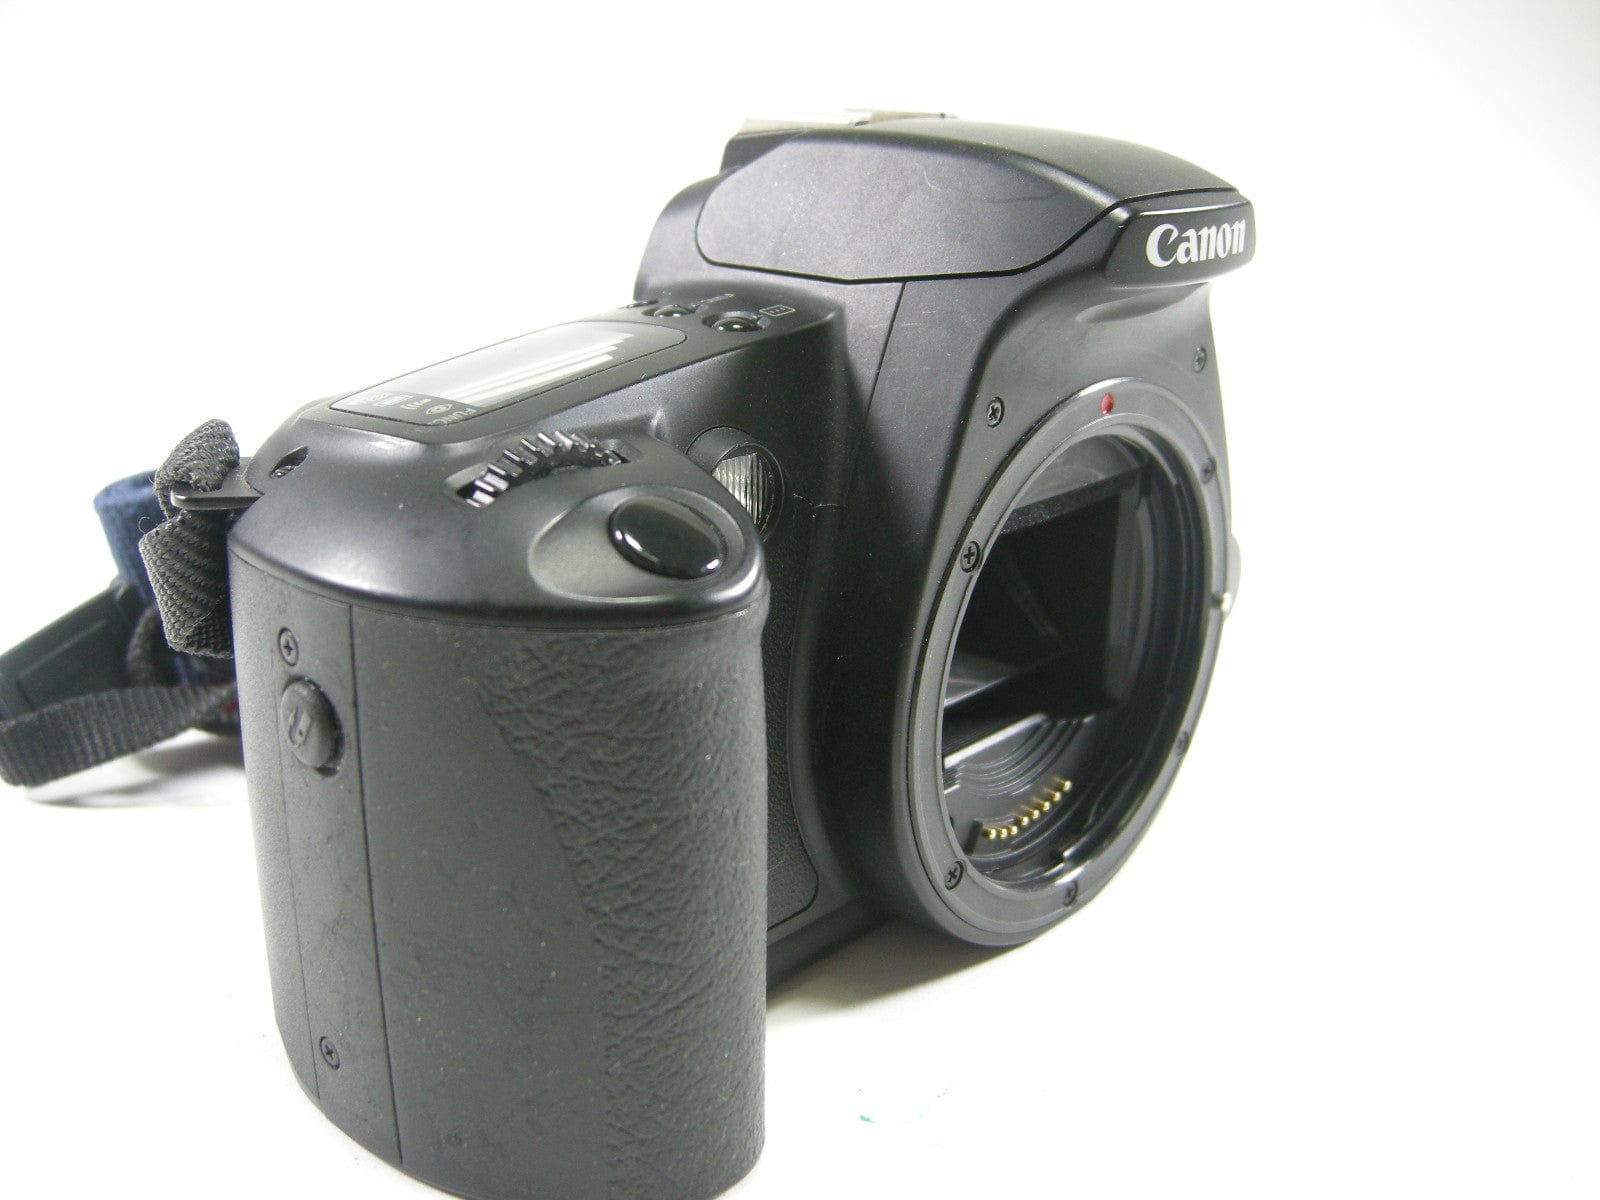 Canon EOS Rebel G 35mm SLR camera body only